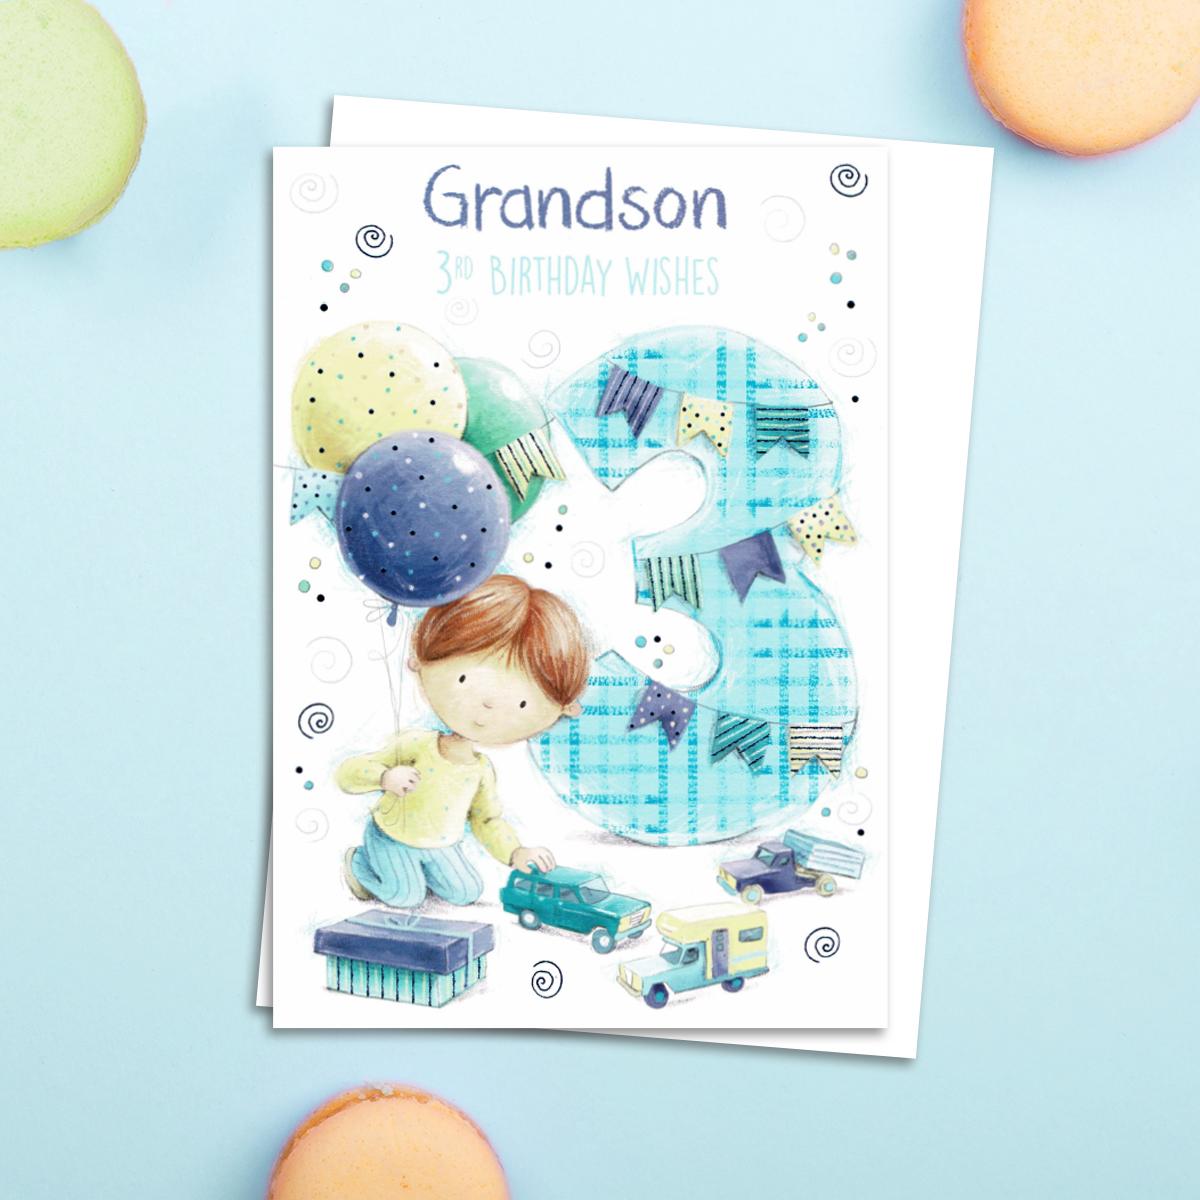 Grandson 3rd Birthday Wishes Greeting Card